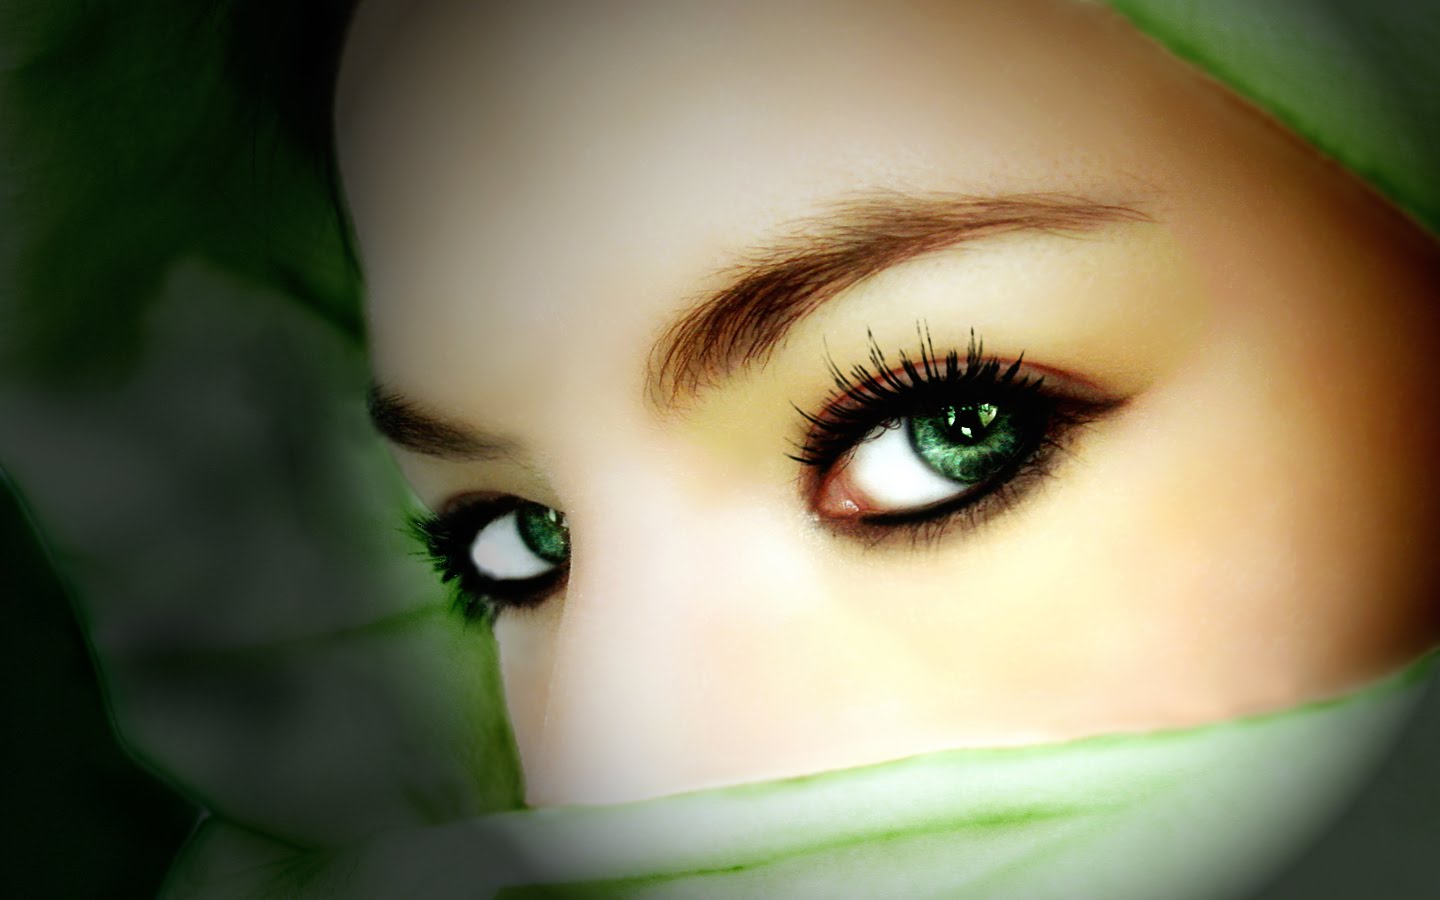 girls eyes wallpaper,face,green,eye,eyebrow,nose